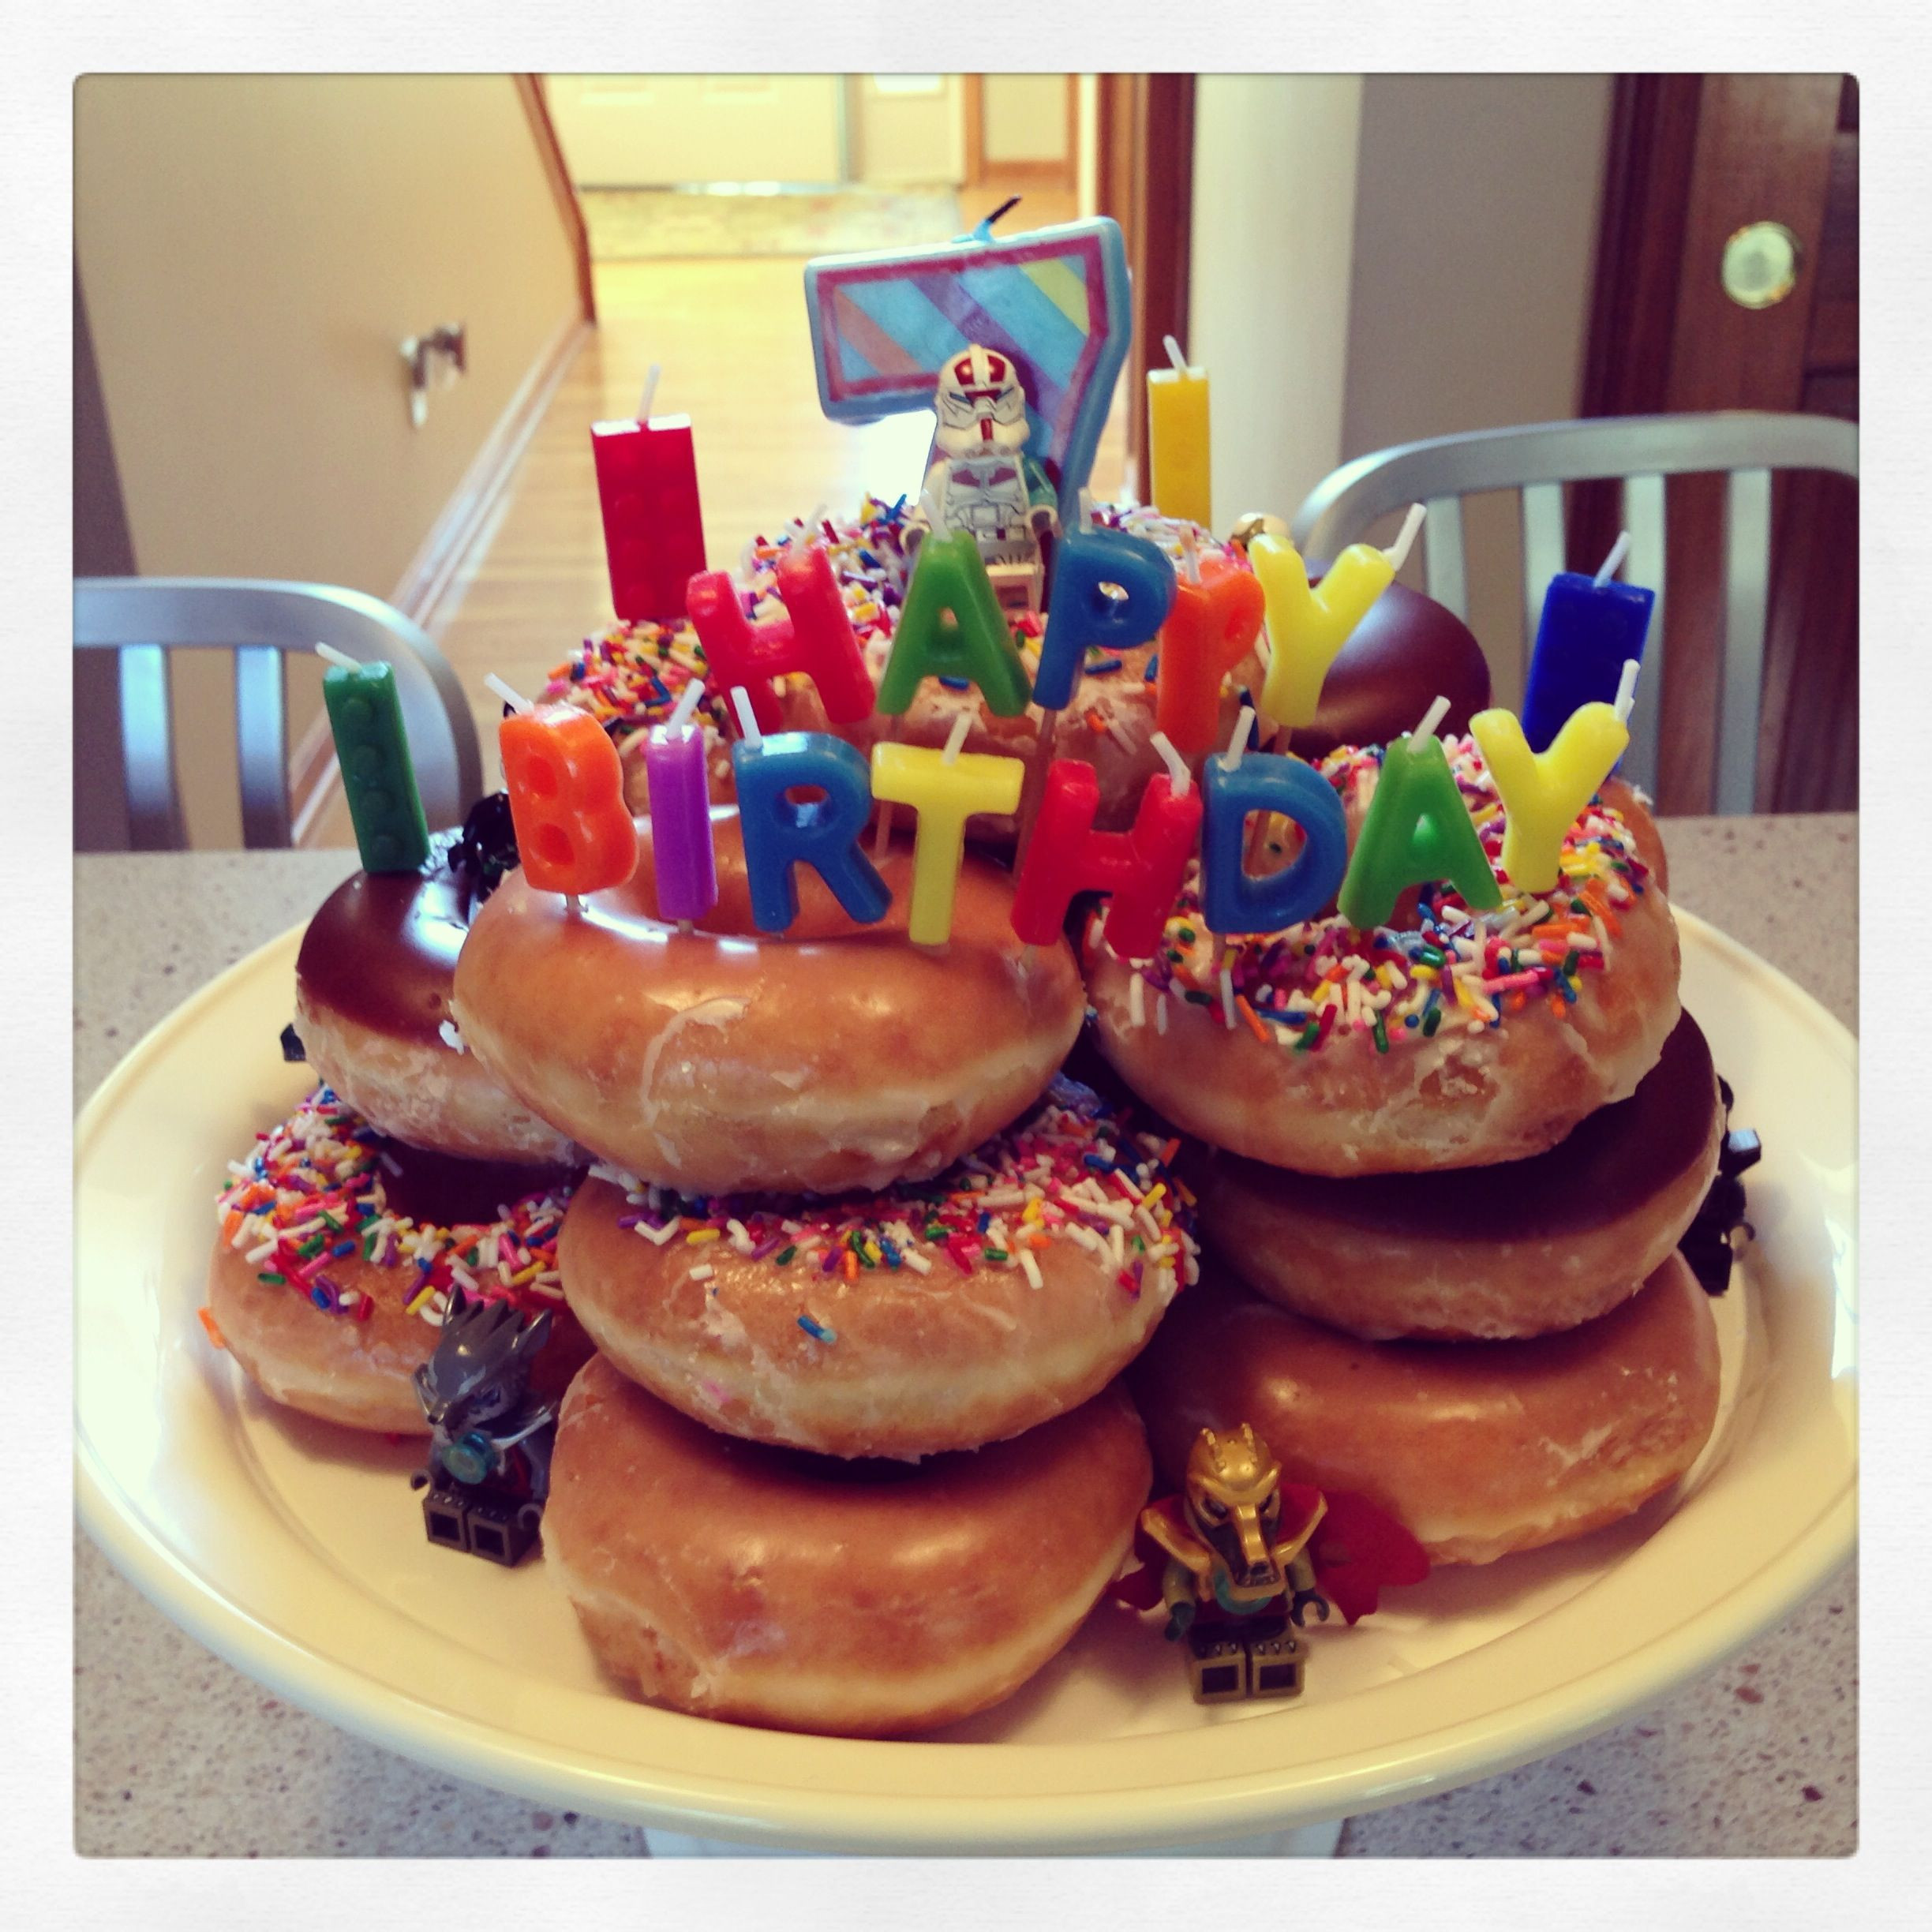 Krispy Kreme Birthday Cake
 Krispy Kreme donut "cake" in 2019